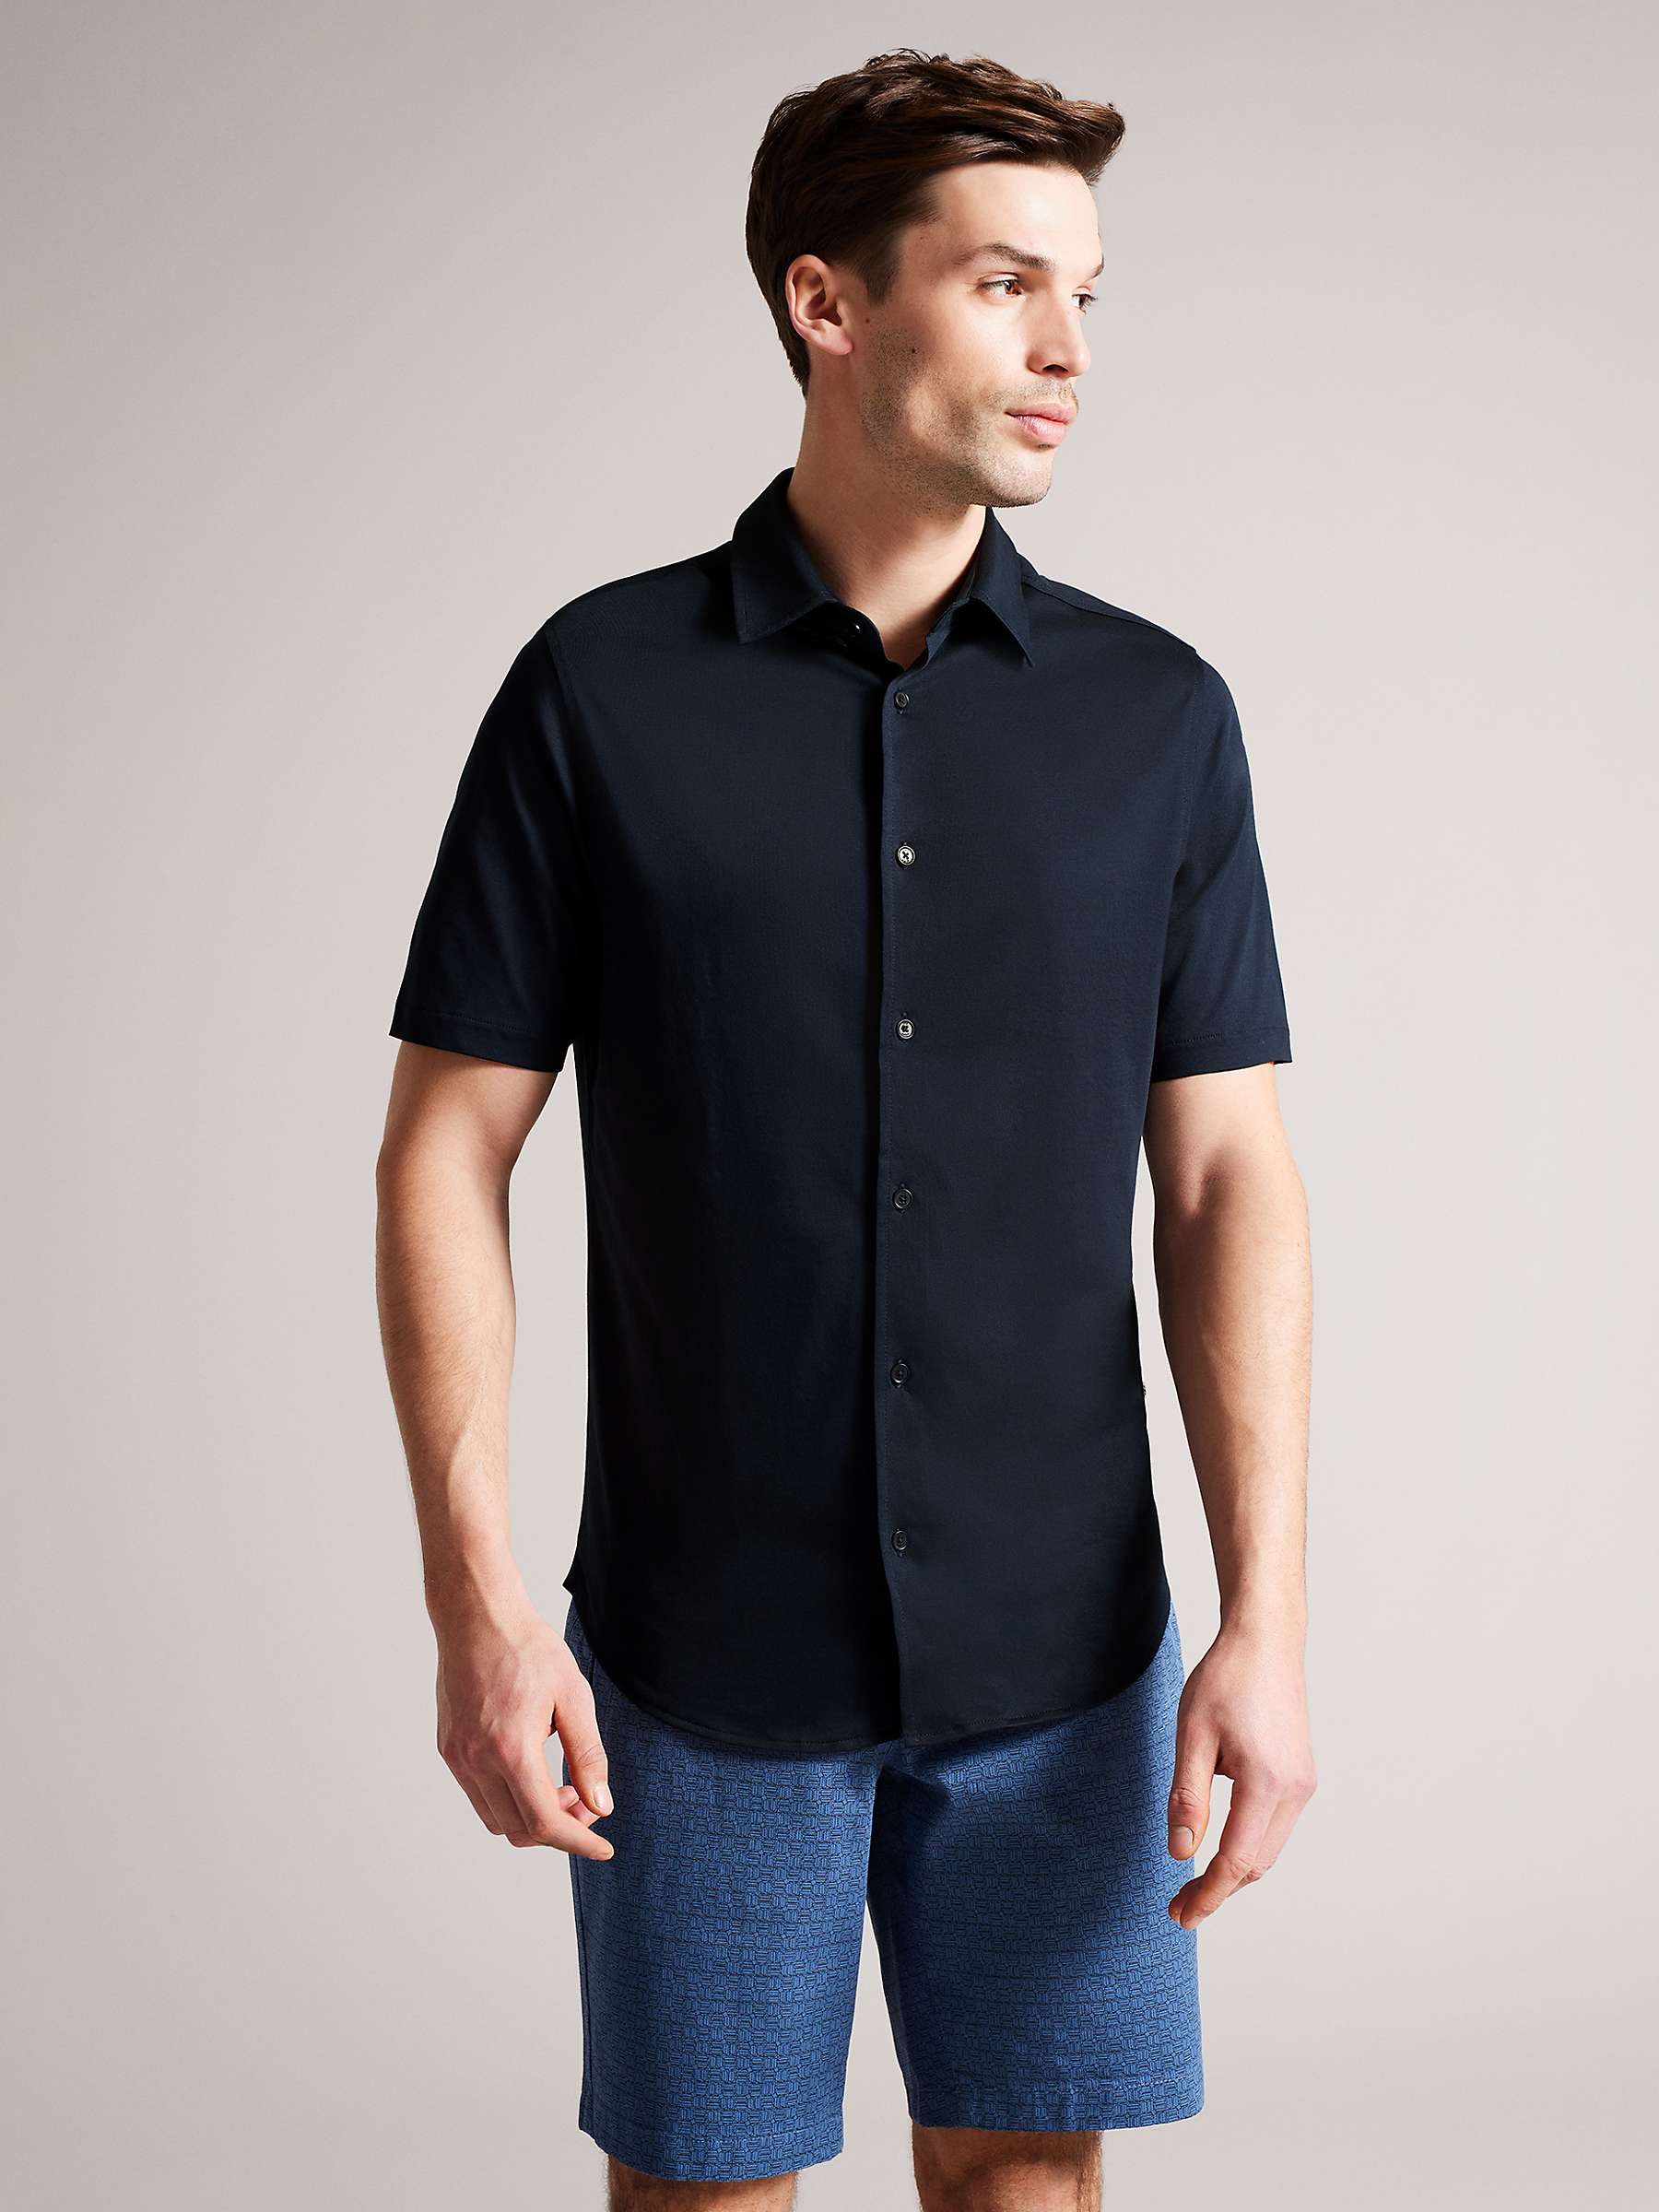 Ted Baker Marrsho Short Sleeve Shirt, Navy at John Lewis & Partners